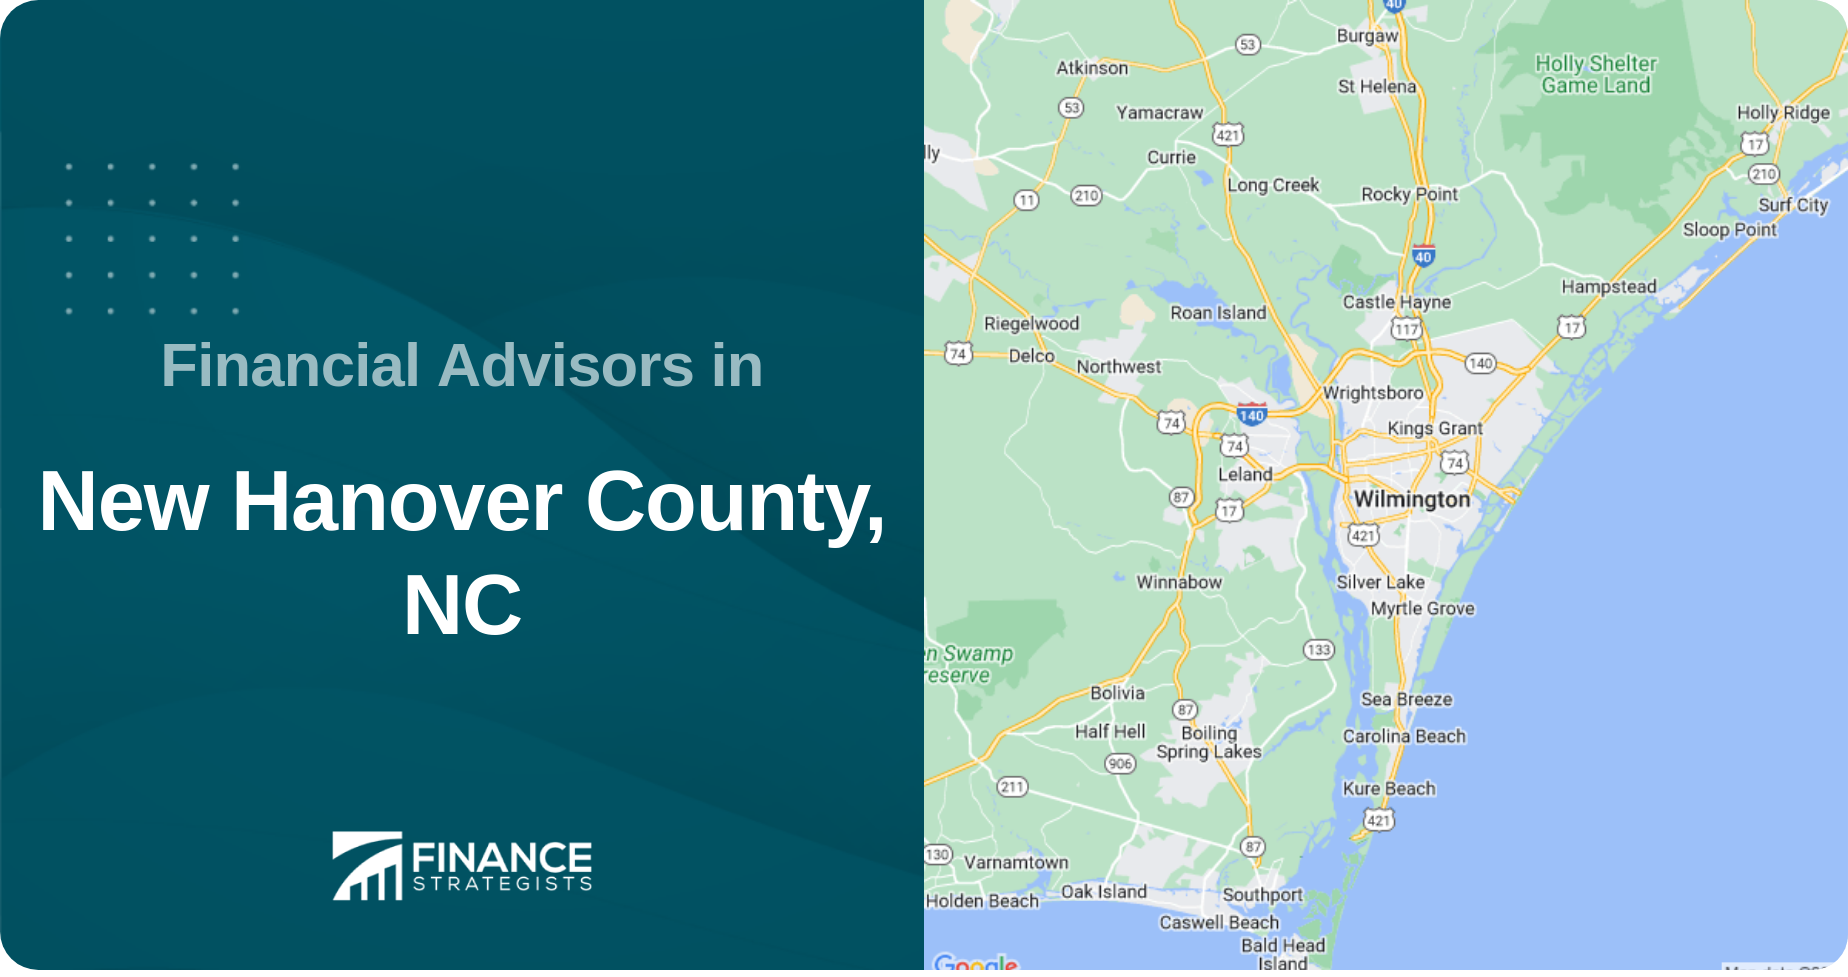 Financial Advisors in New Hanover County, NC